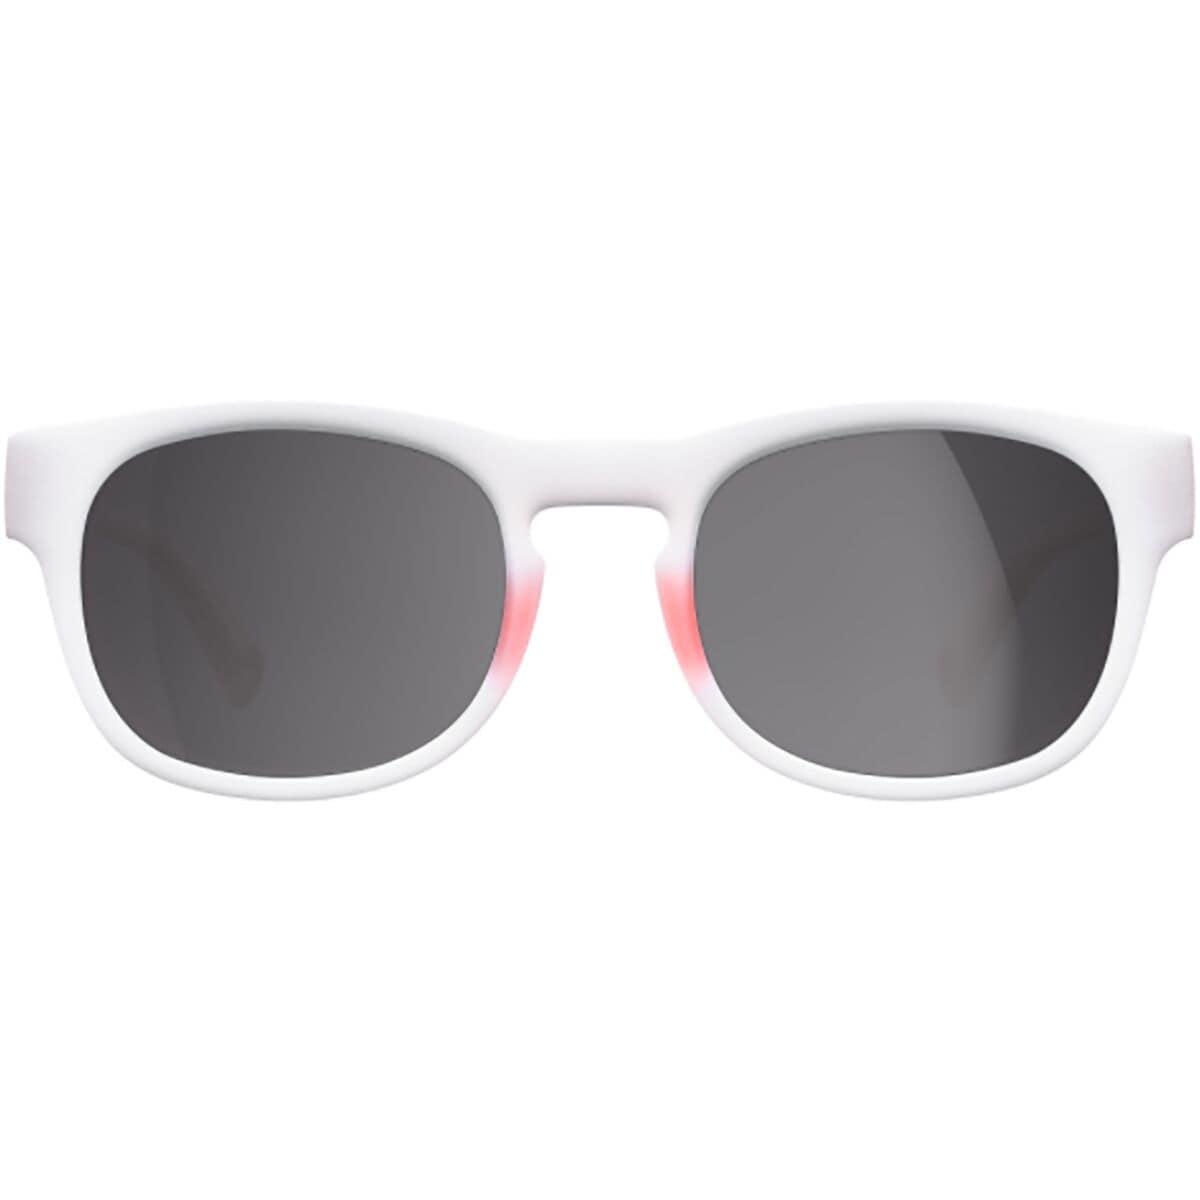  POC Evolve Sunglasses - Accessories